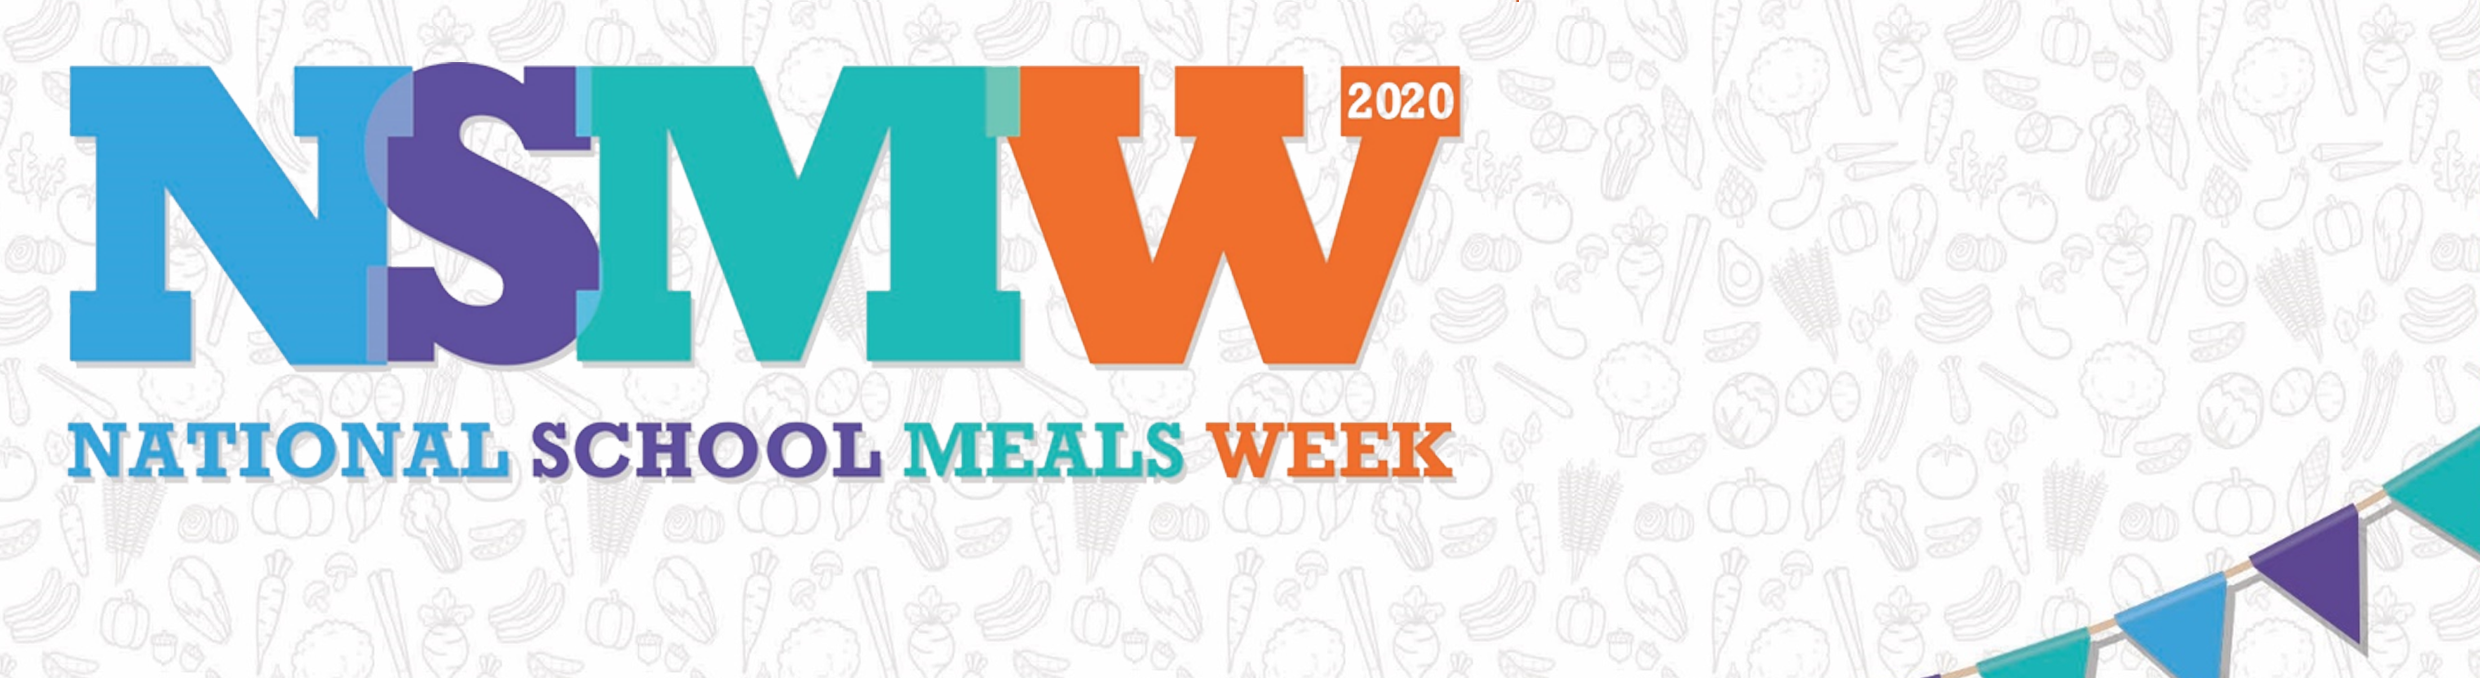 National School Meals Week 2020 logo